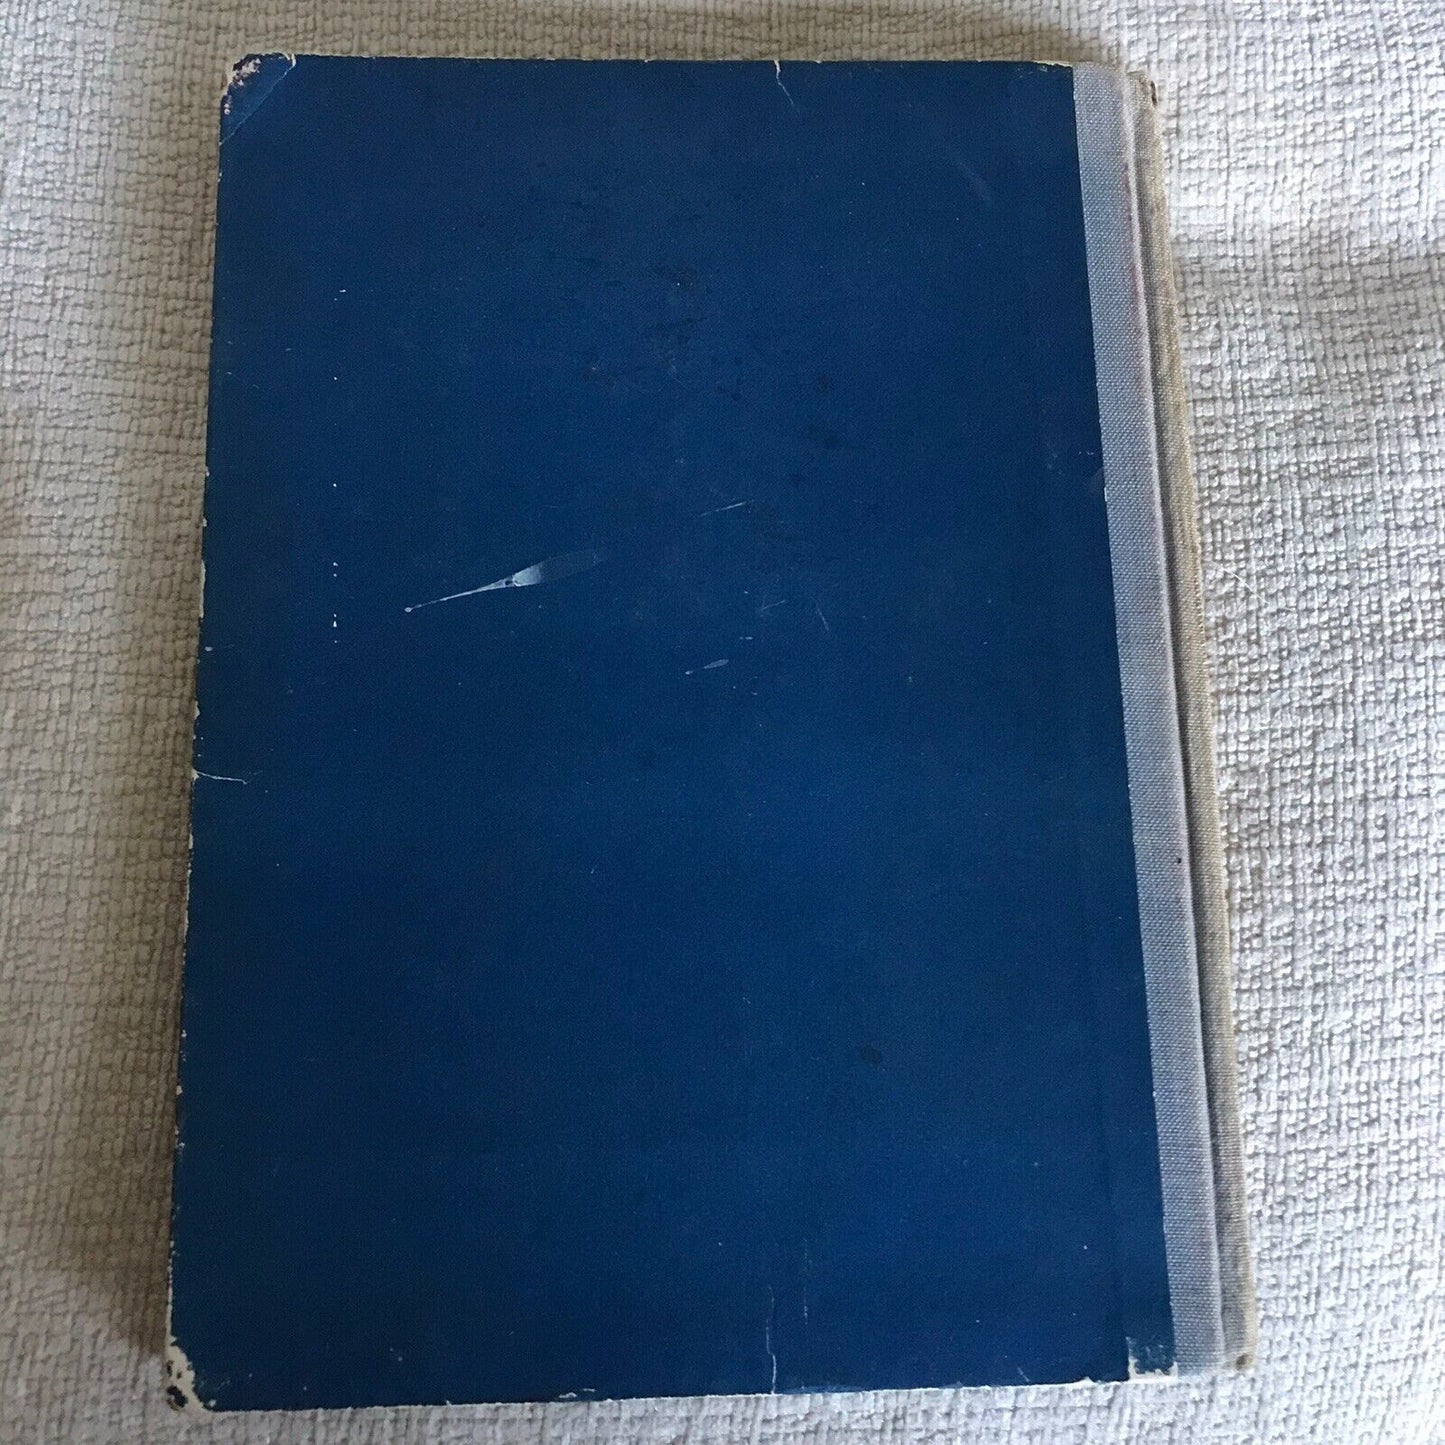 1948*1st* The Mullingar Heifer - Mary Walsh(Henry C. Pitz)Frederick Muller Honeyburn Books (UK)